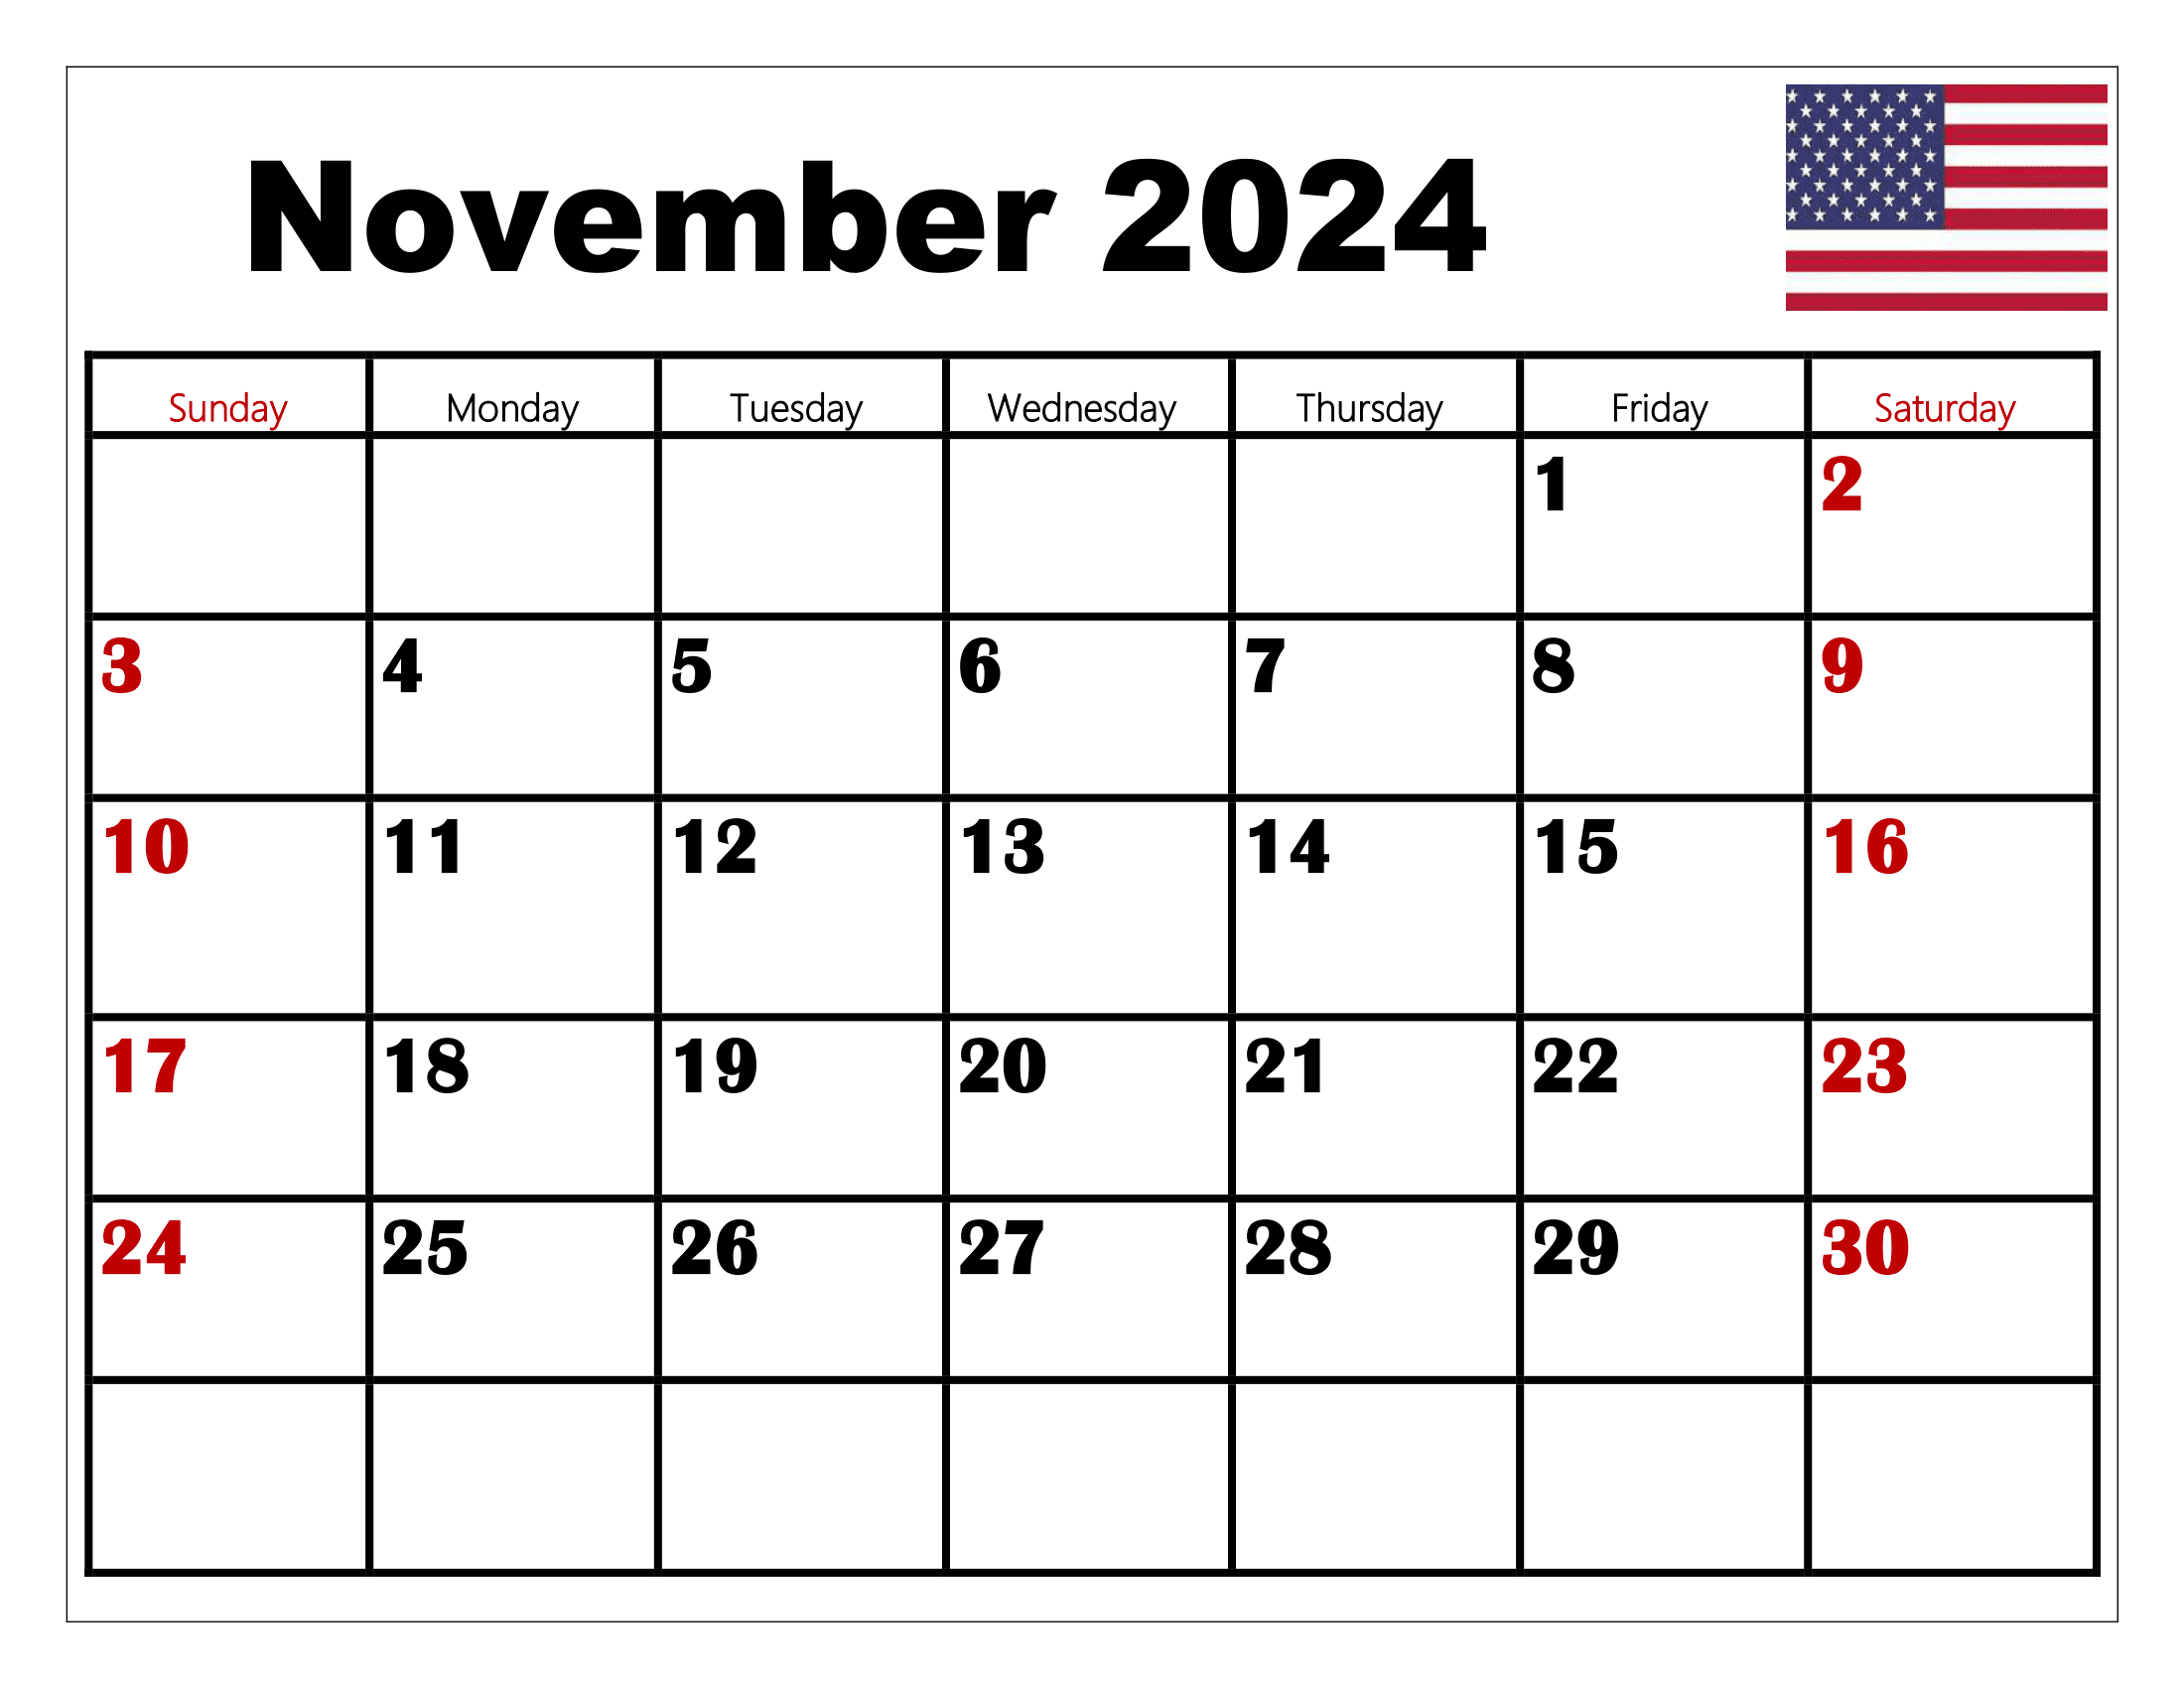 November 2024 Calendar Printable Pdf Template With Holidays for Printable Calendar 2024 November